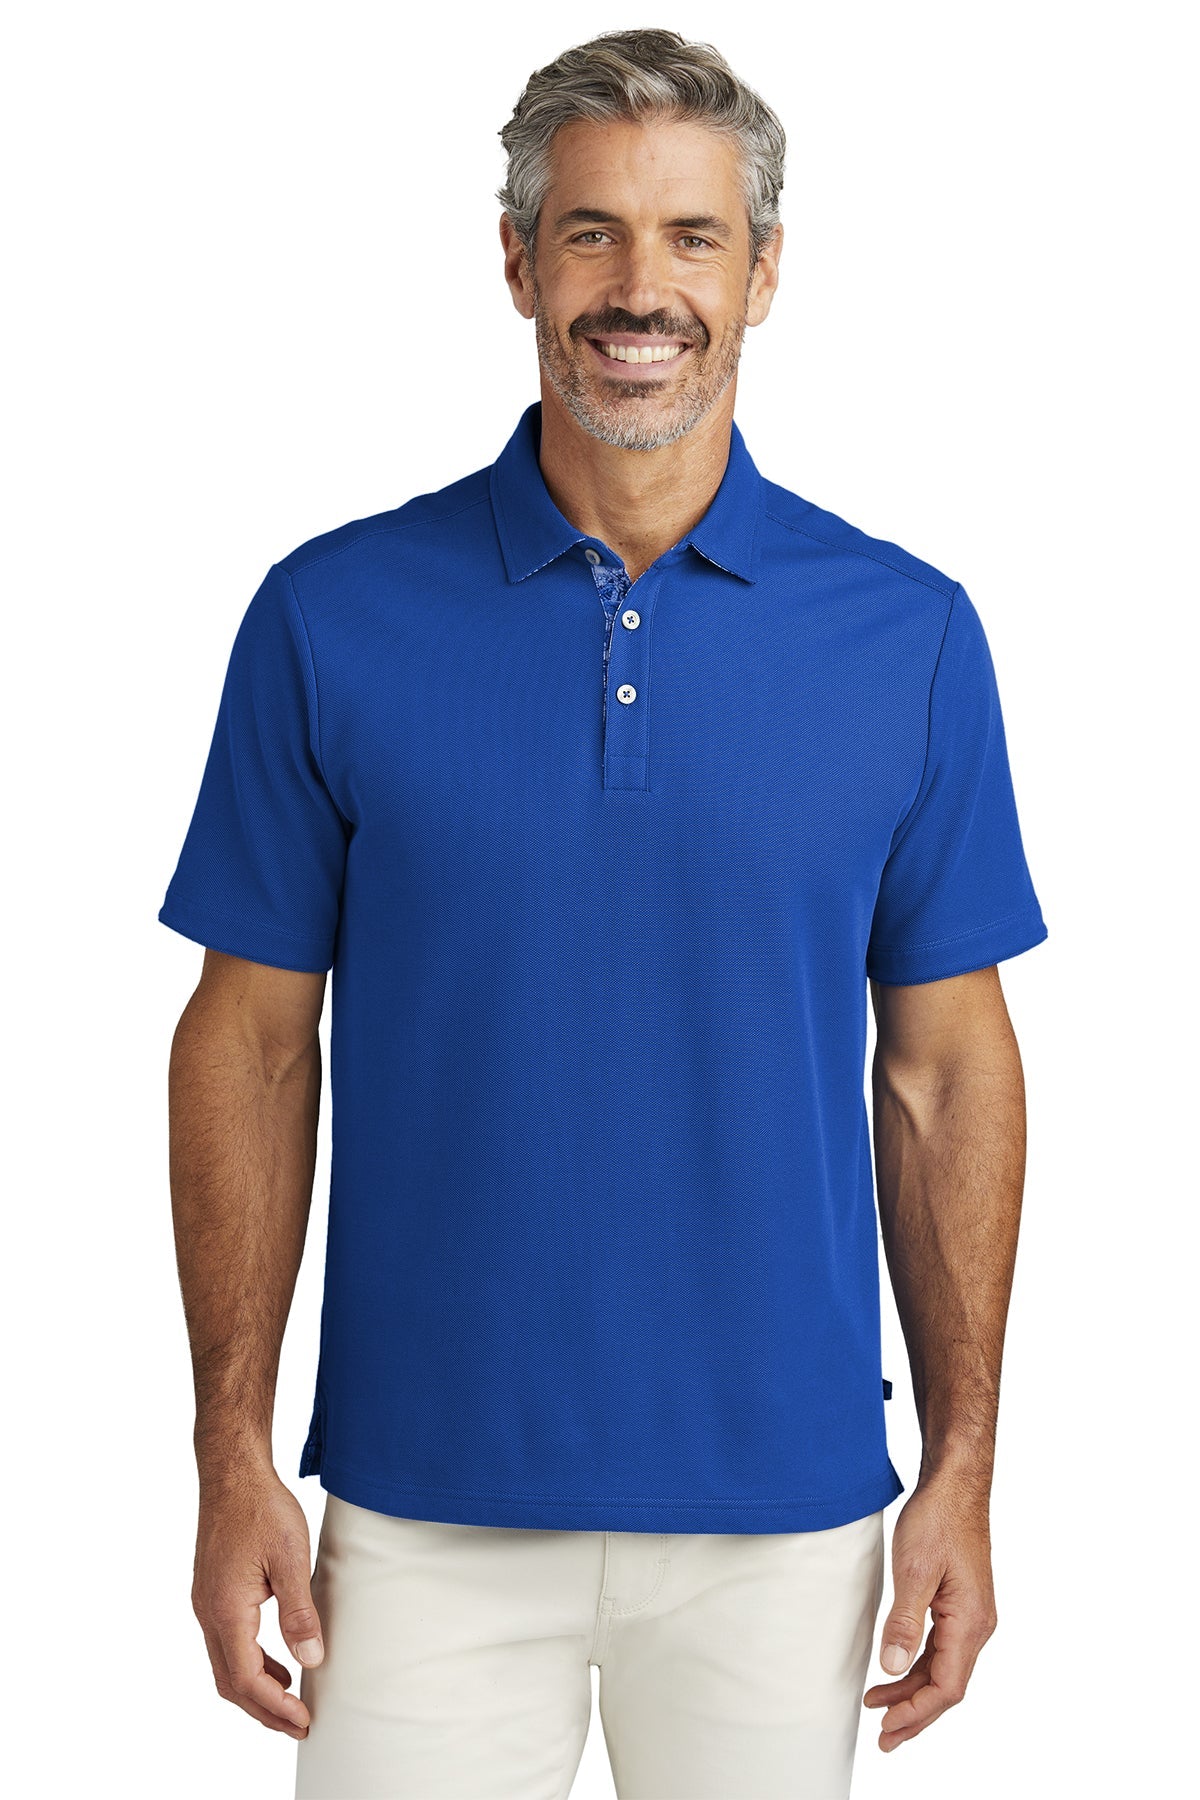 Tommy Bahama Team Blue T223508TB custom logo polo shirts